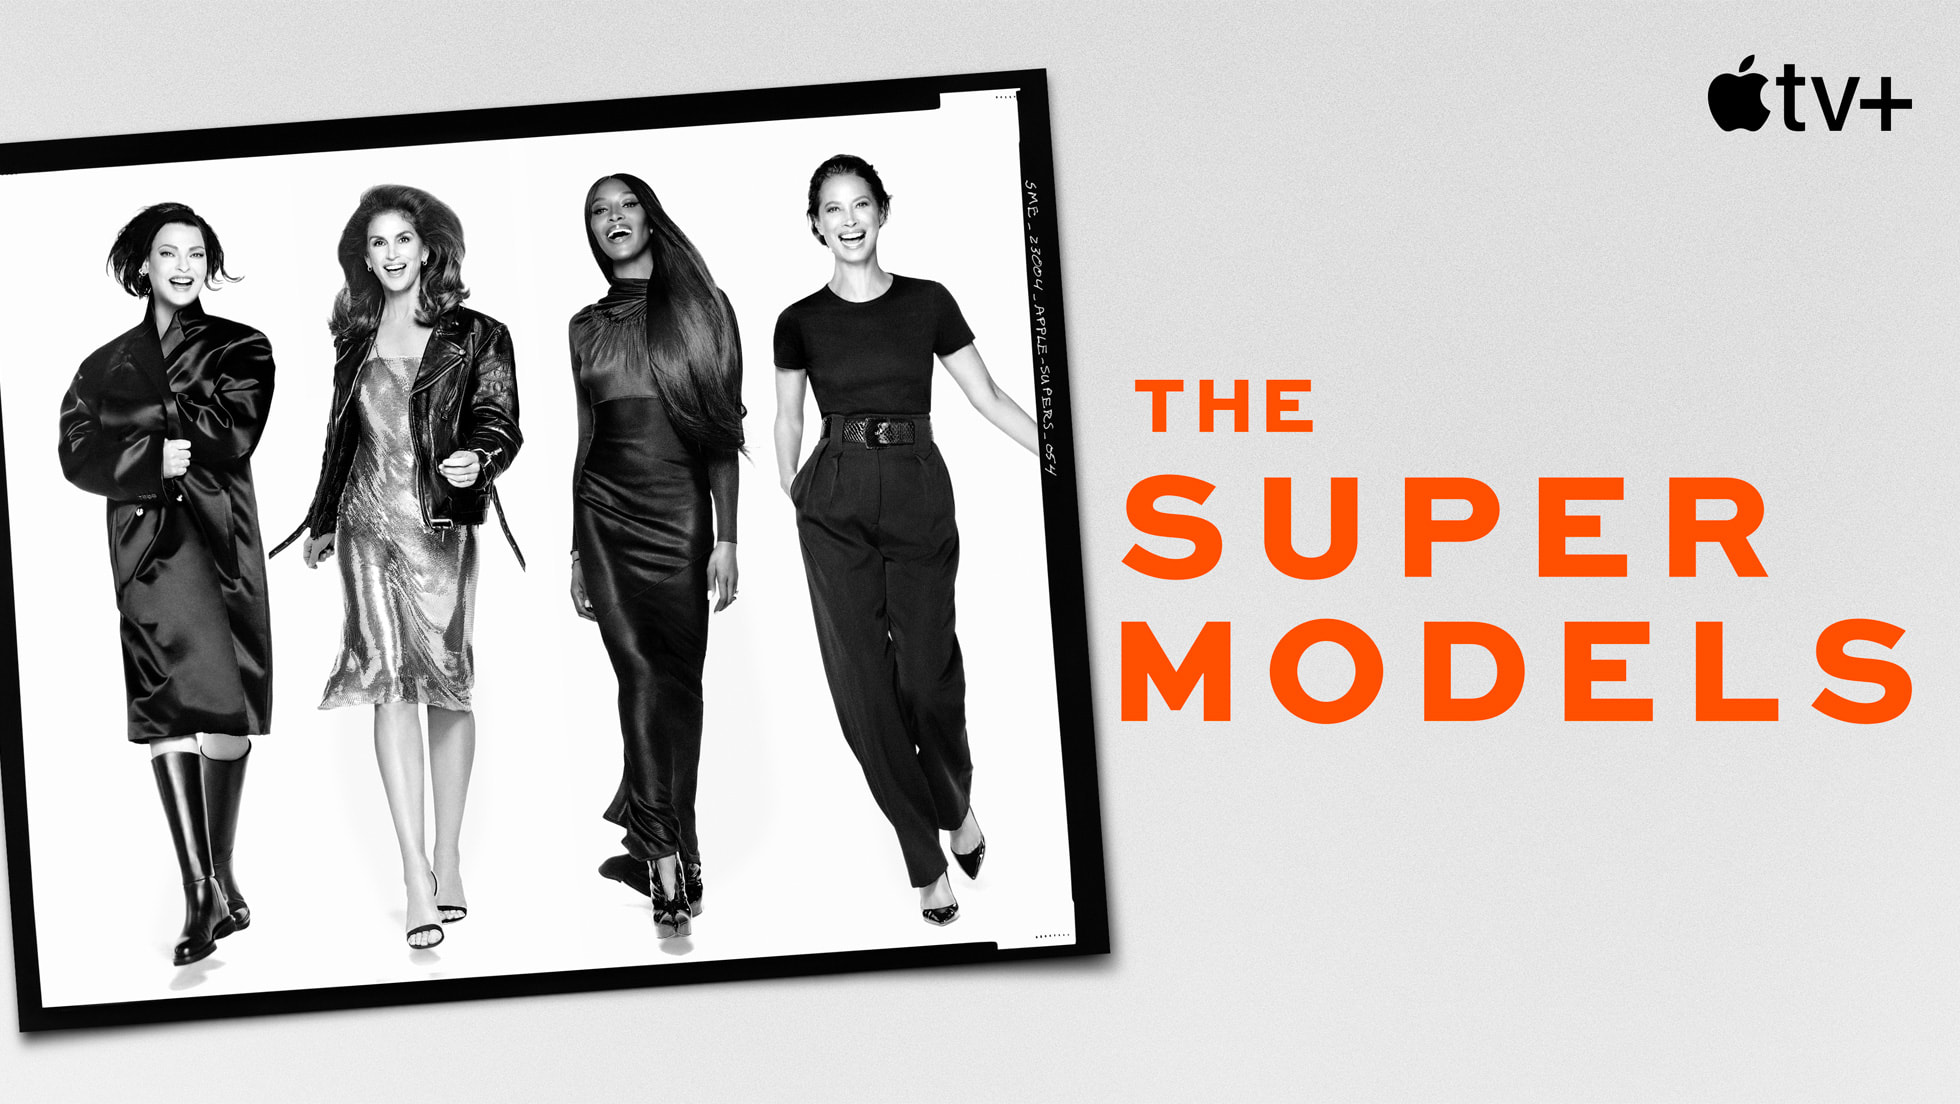 Apple TV+’s documentary event “The Super Models” Premieres on September 20